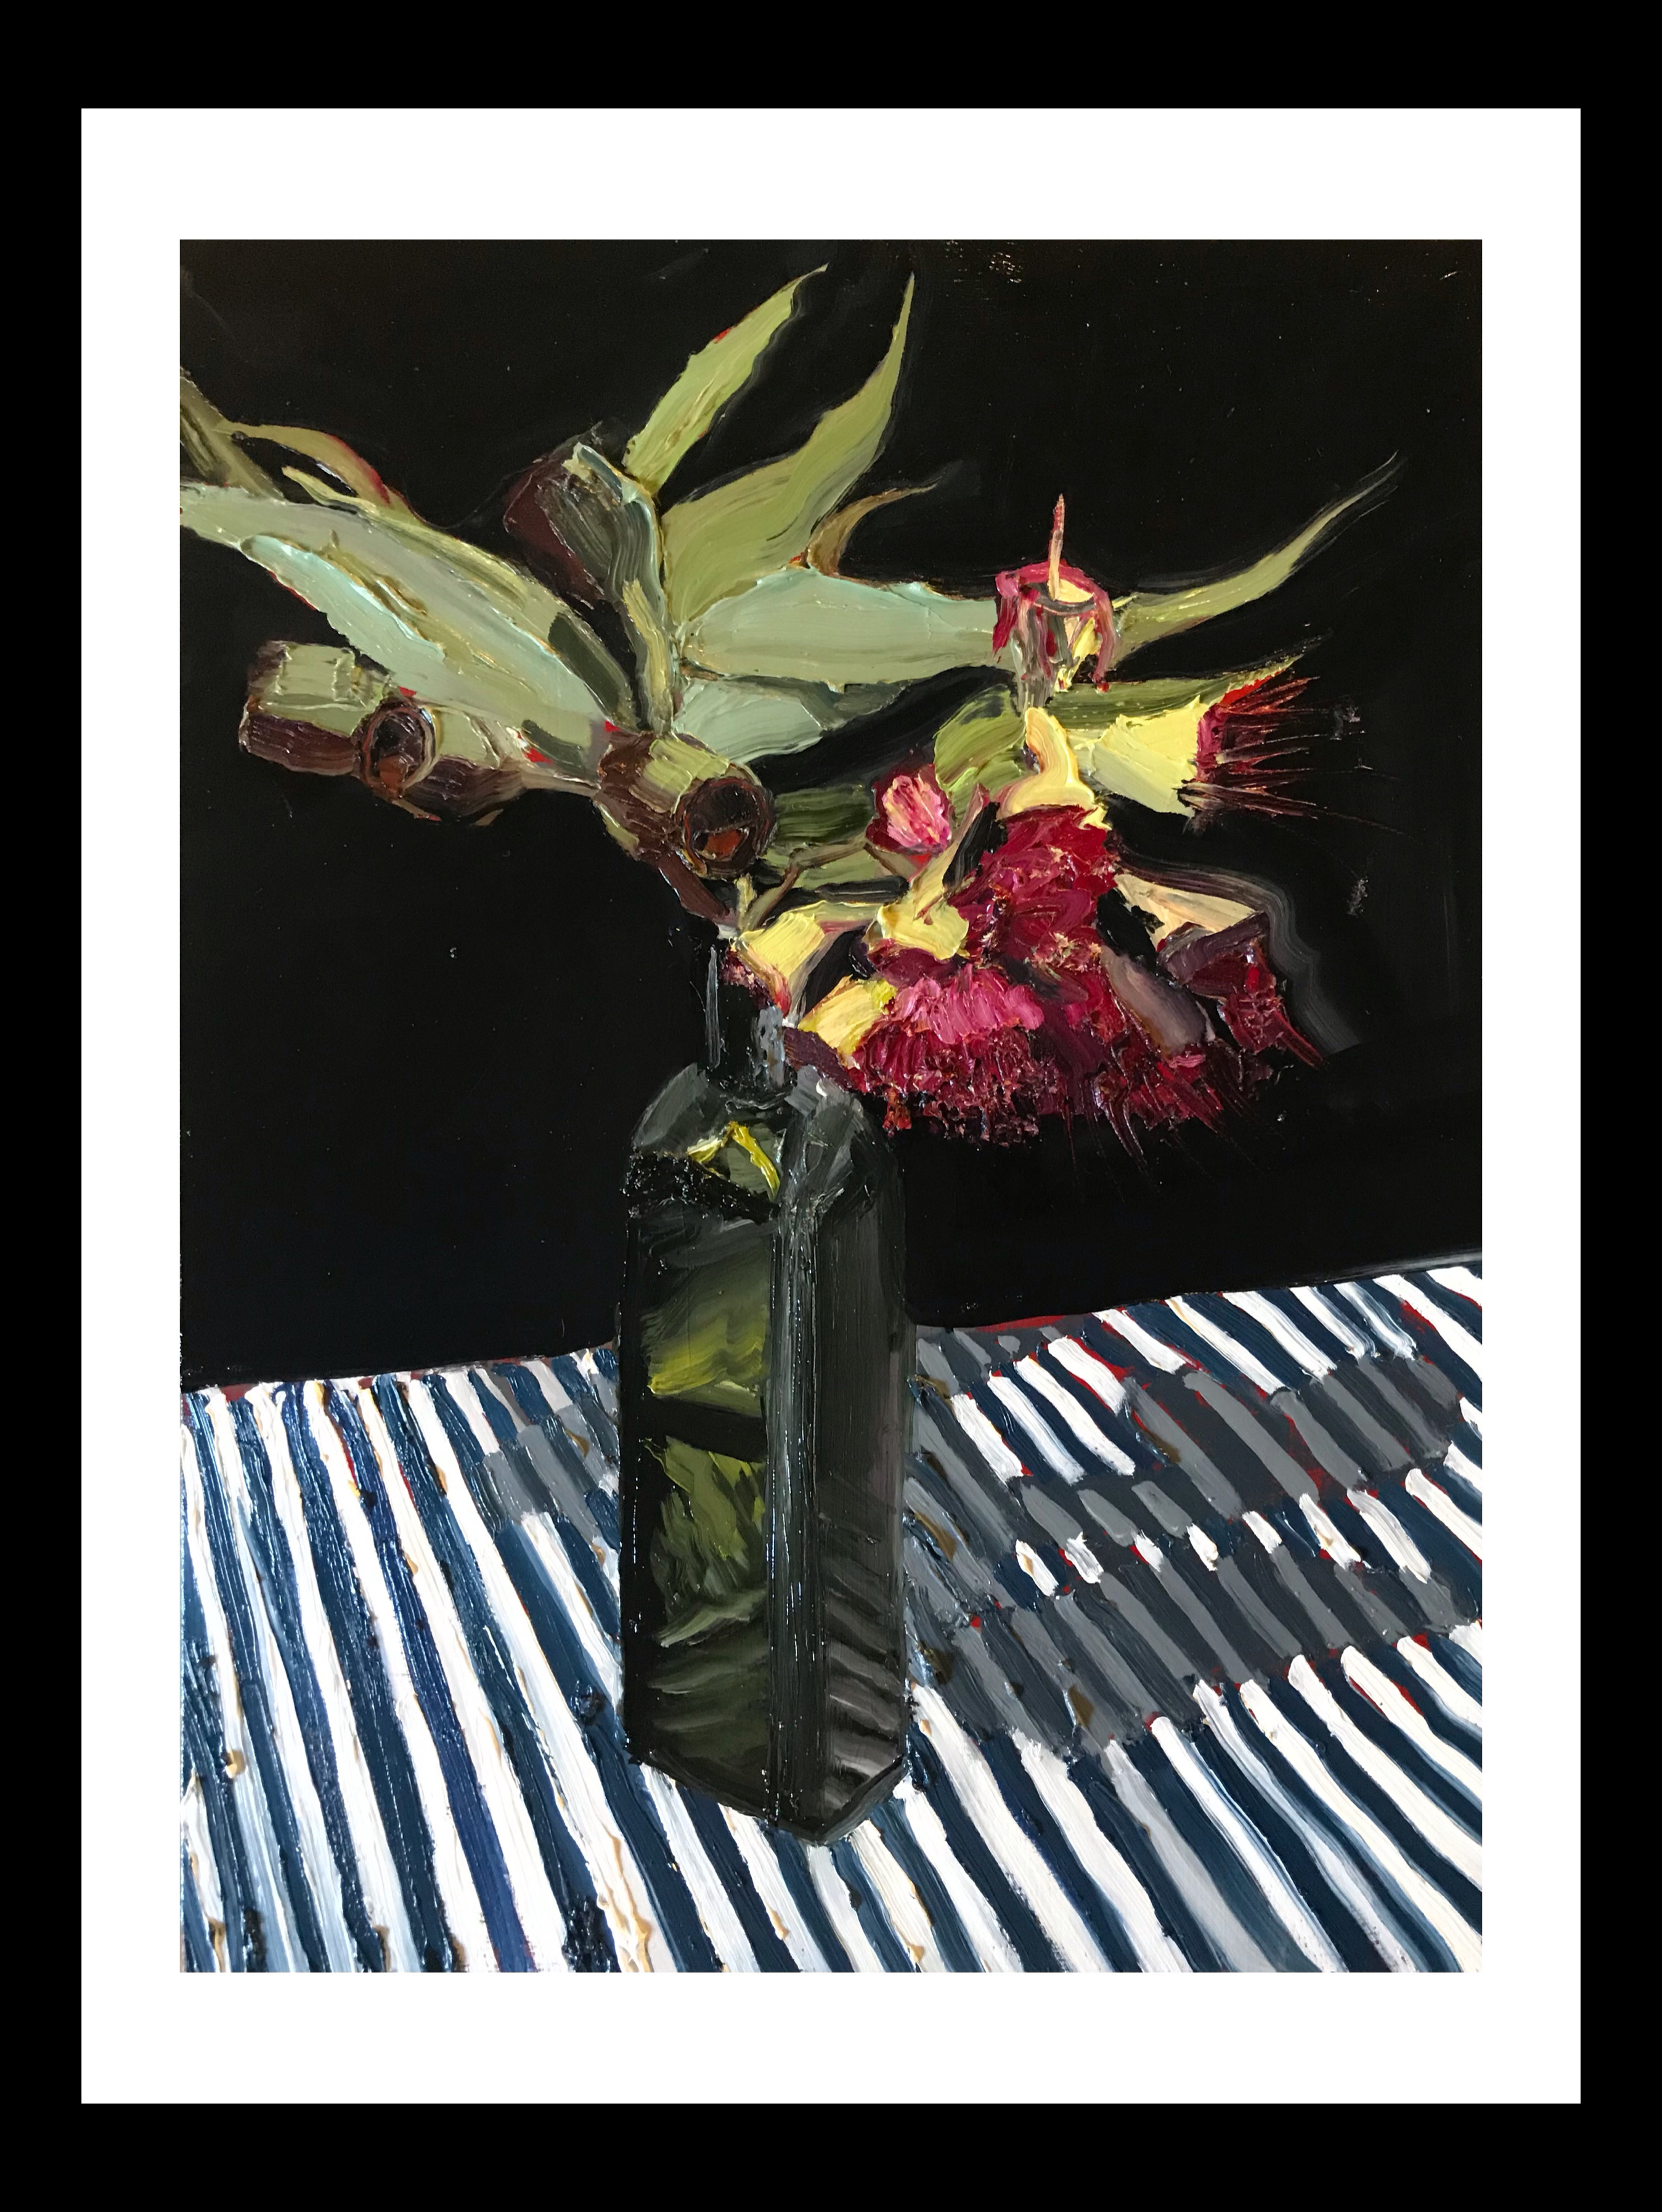 Gumnuts & Olive Oil  by Conor Knight  | Clayton Utz Art Award 2021 Finalists | Lethbridge Gallery